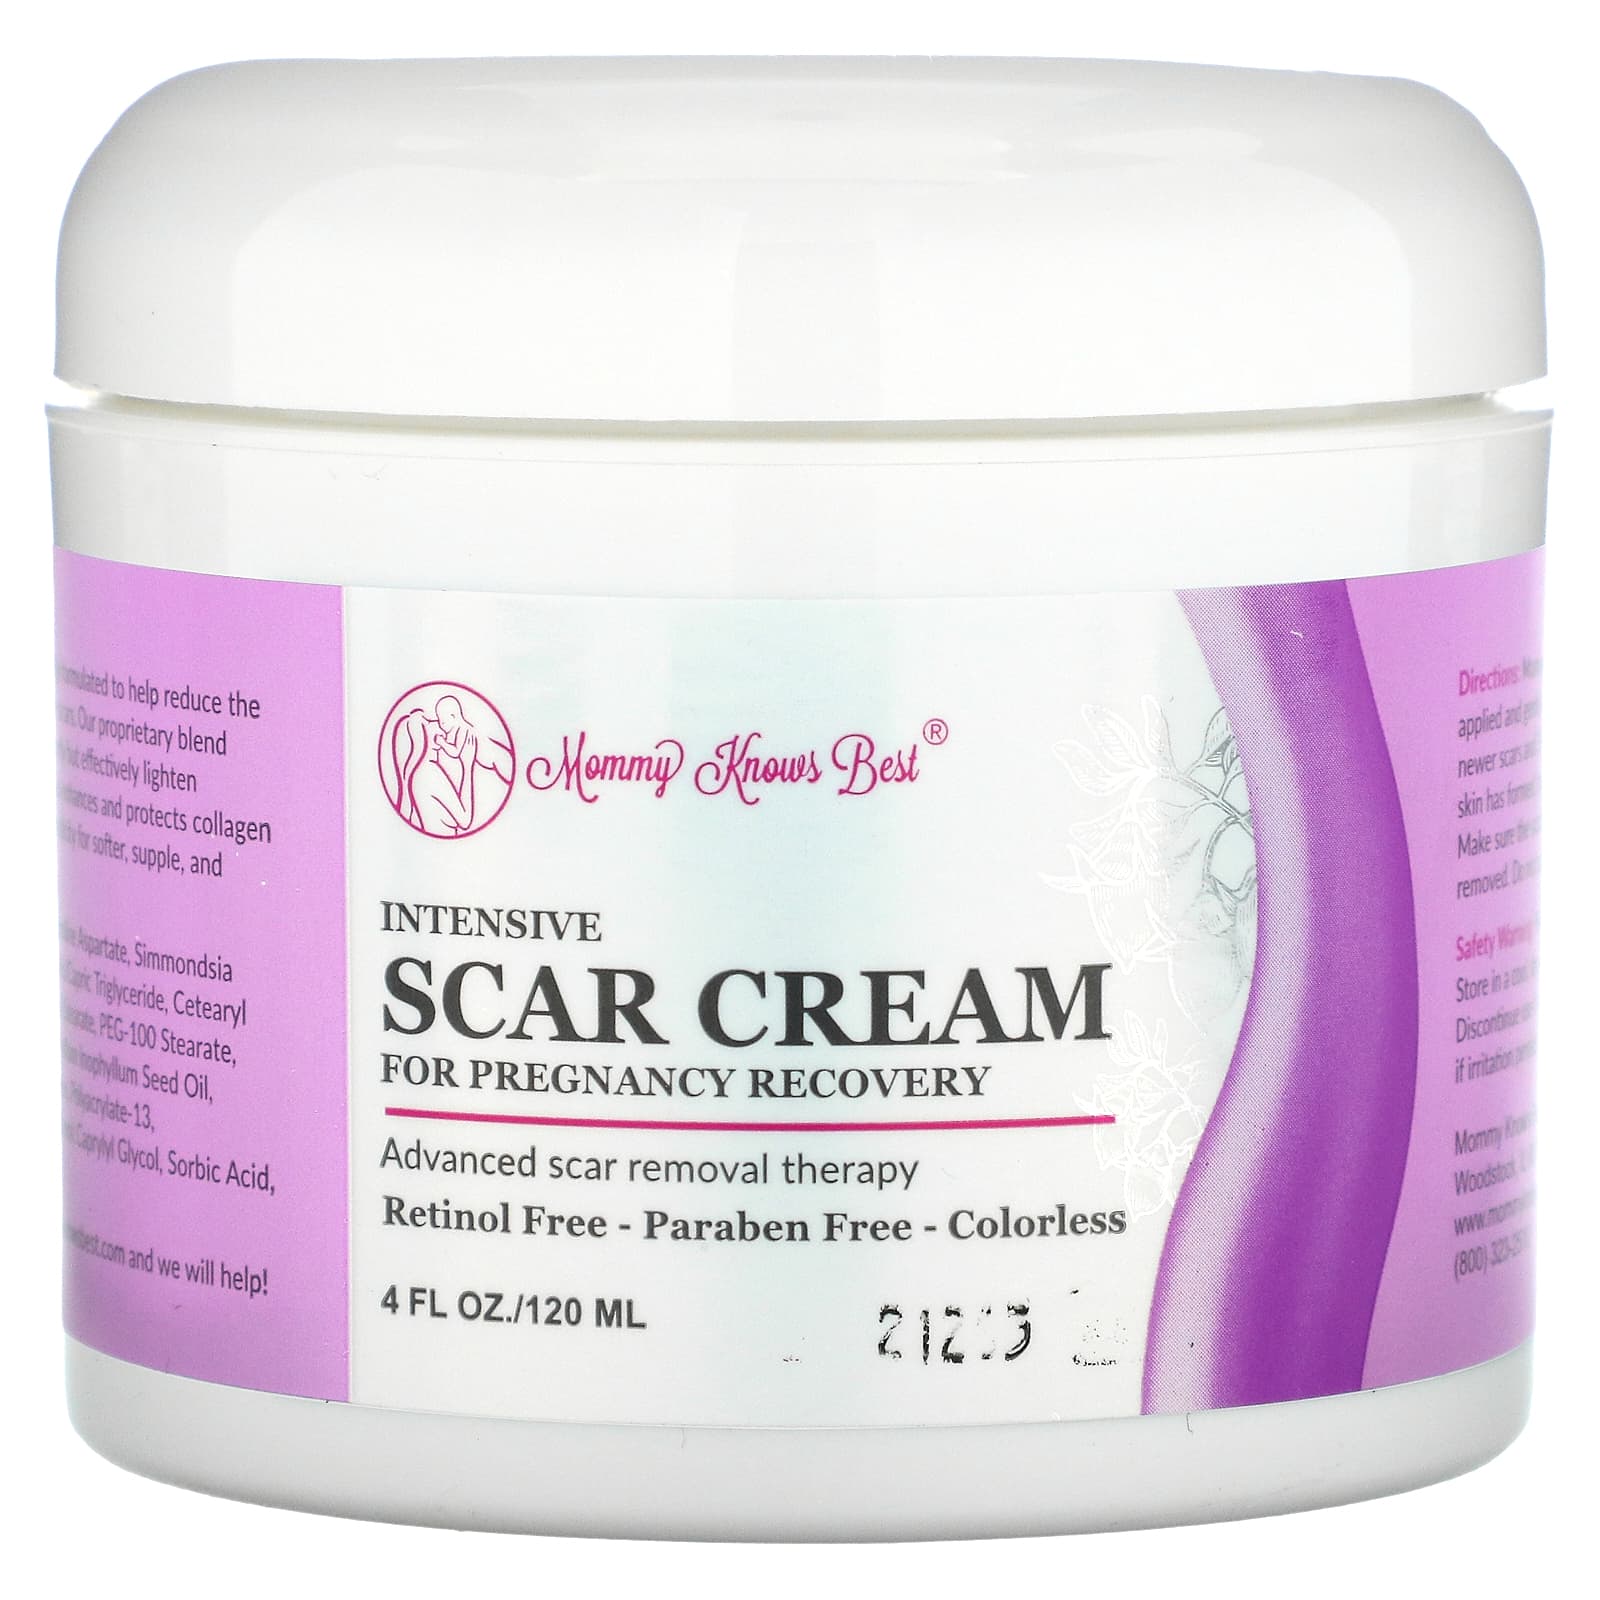 Scar Minimizer Cream by Clarity Essentials 💙#scarcream #scarminimizer